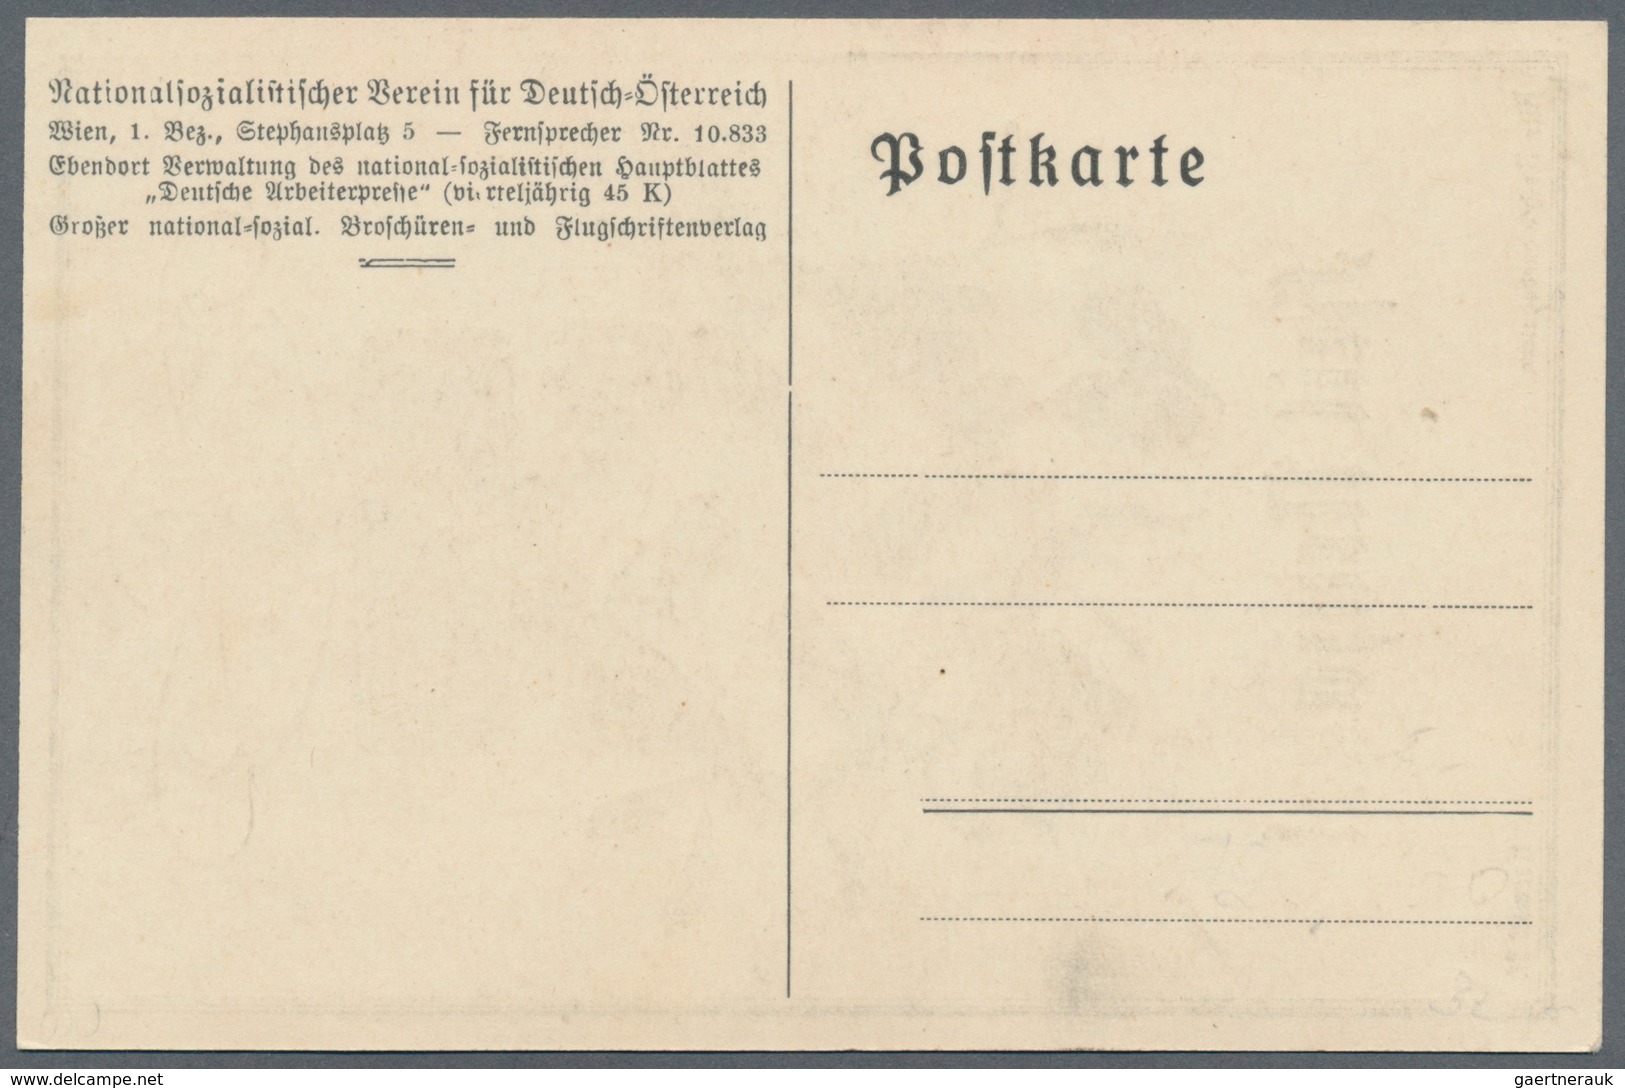 Ansichtskarten: Propaganda: 1921. Heil Neujahr / Happy New Year: Austria Nazi Party Card From 1921! - Politieke Partijen & Verkiezingen